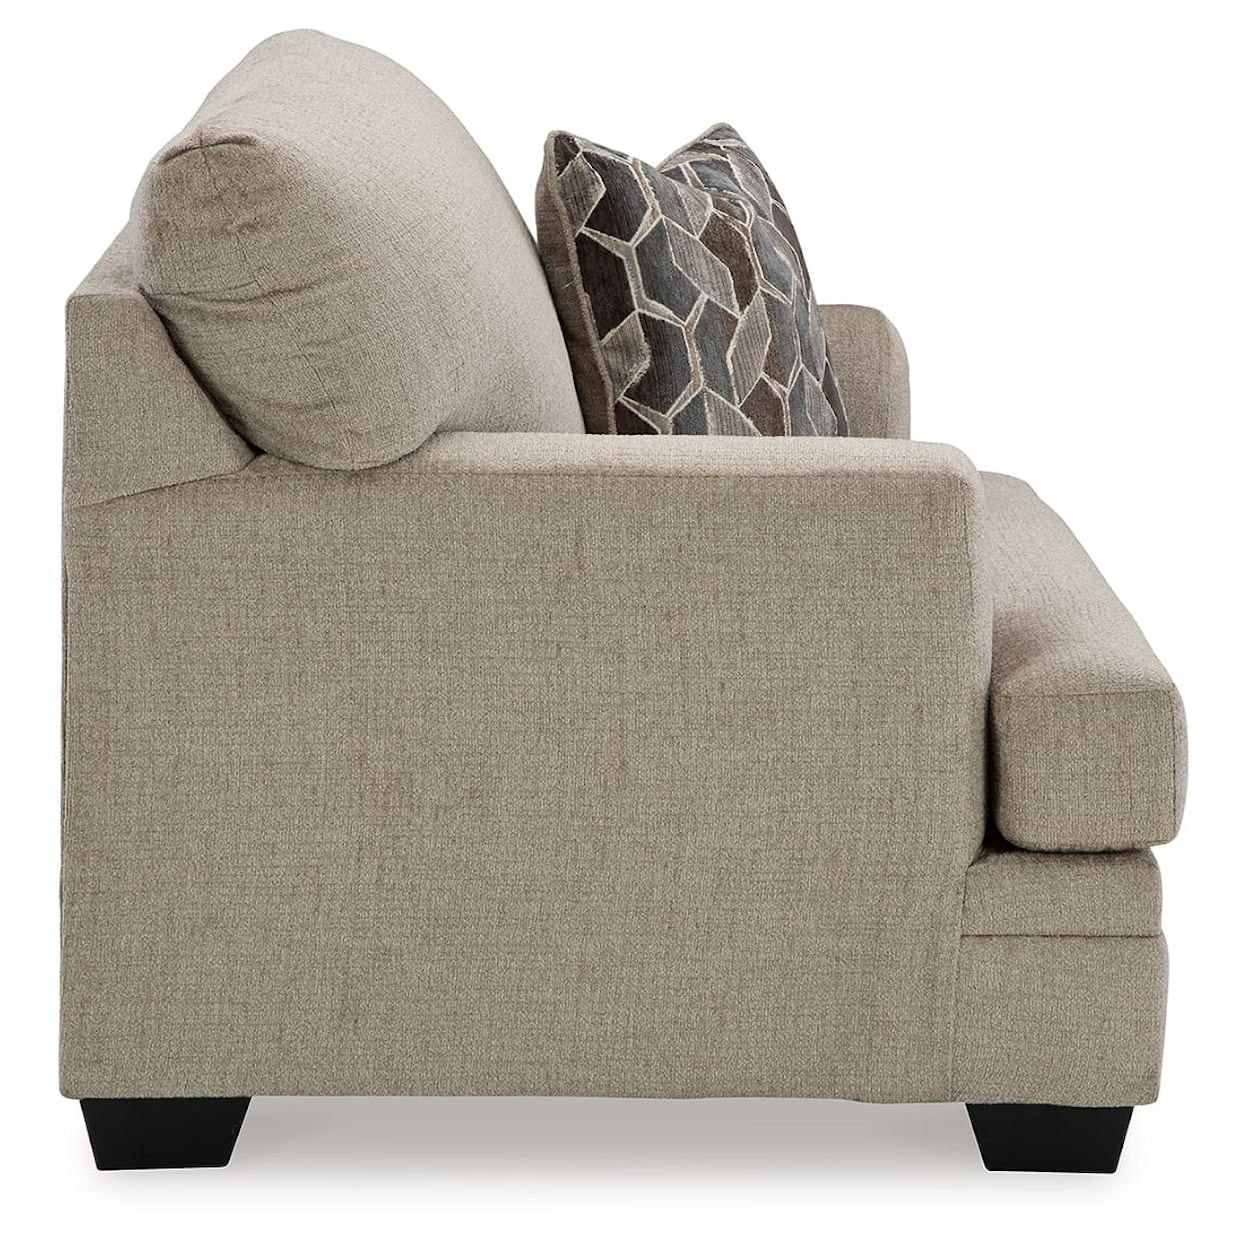 Ashley Furniture Signature Design Stonemeade Oversized Chair